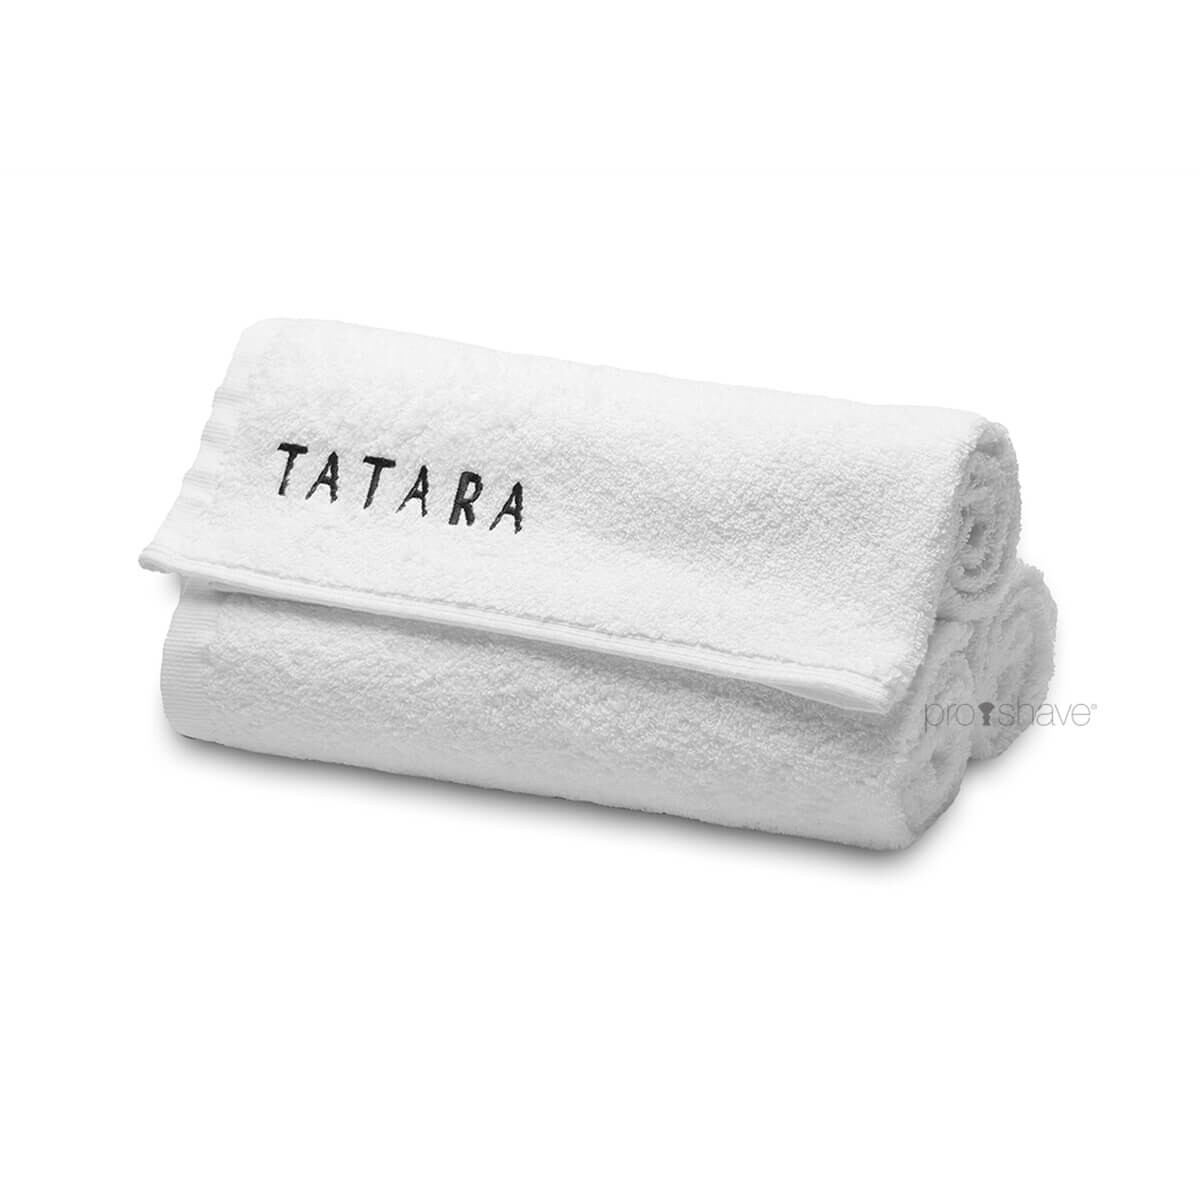 Se Tatara Barberhåndklæde, Hvid hos Proshave